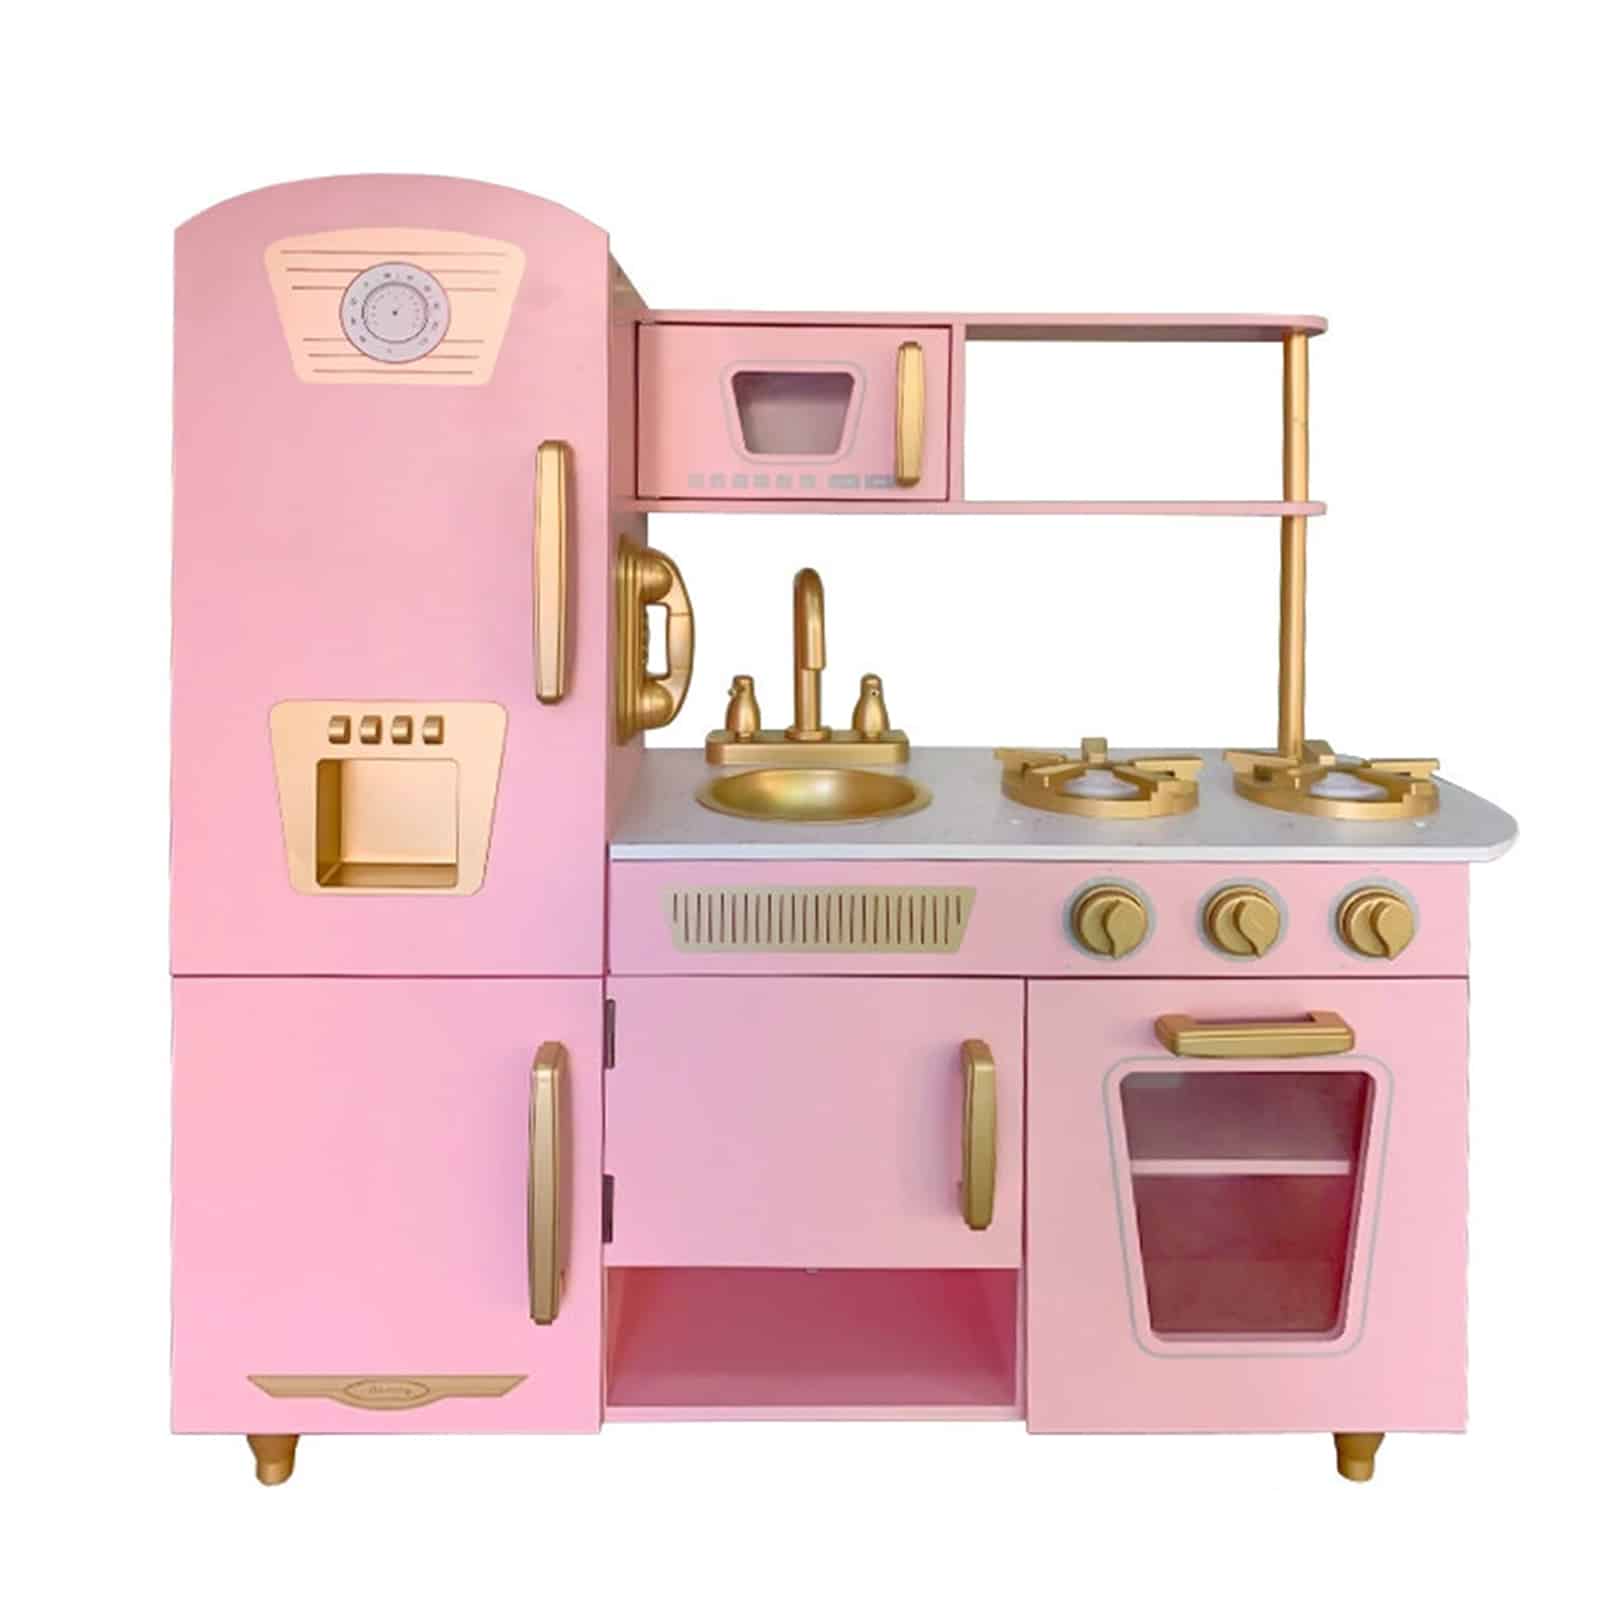 KidKraft Cucina Giocattolo in Stile Vintage - Rosa - Legno bambina